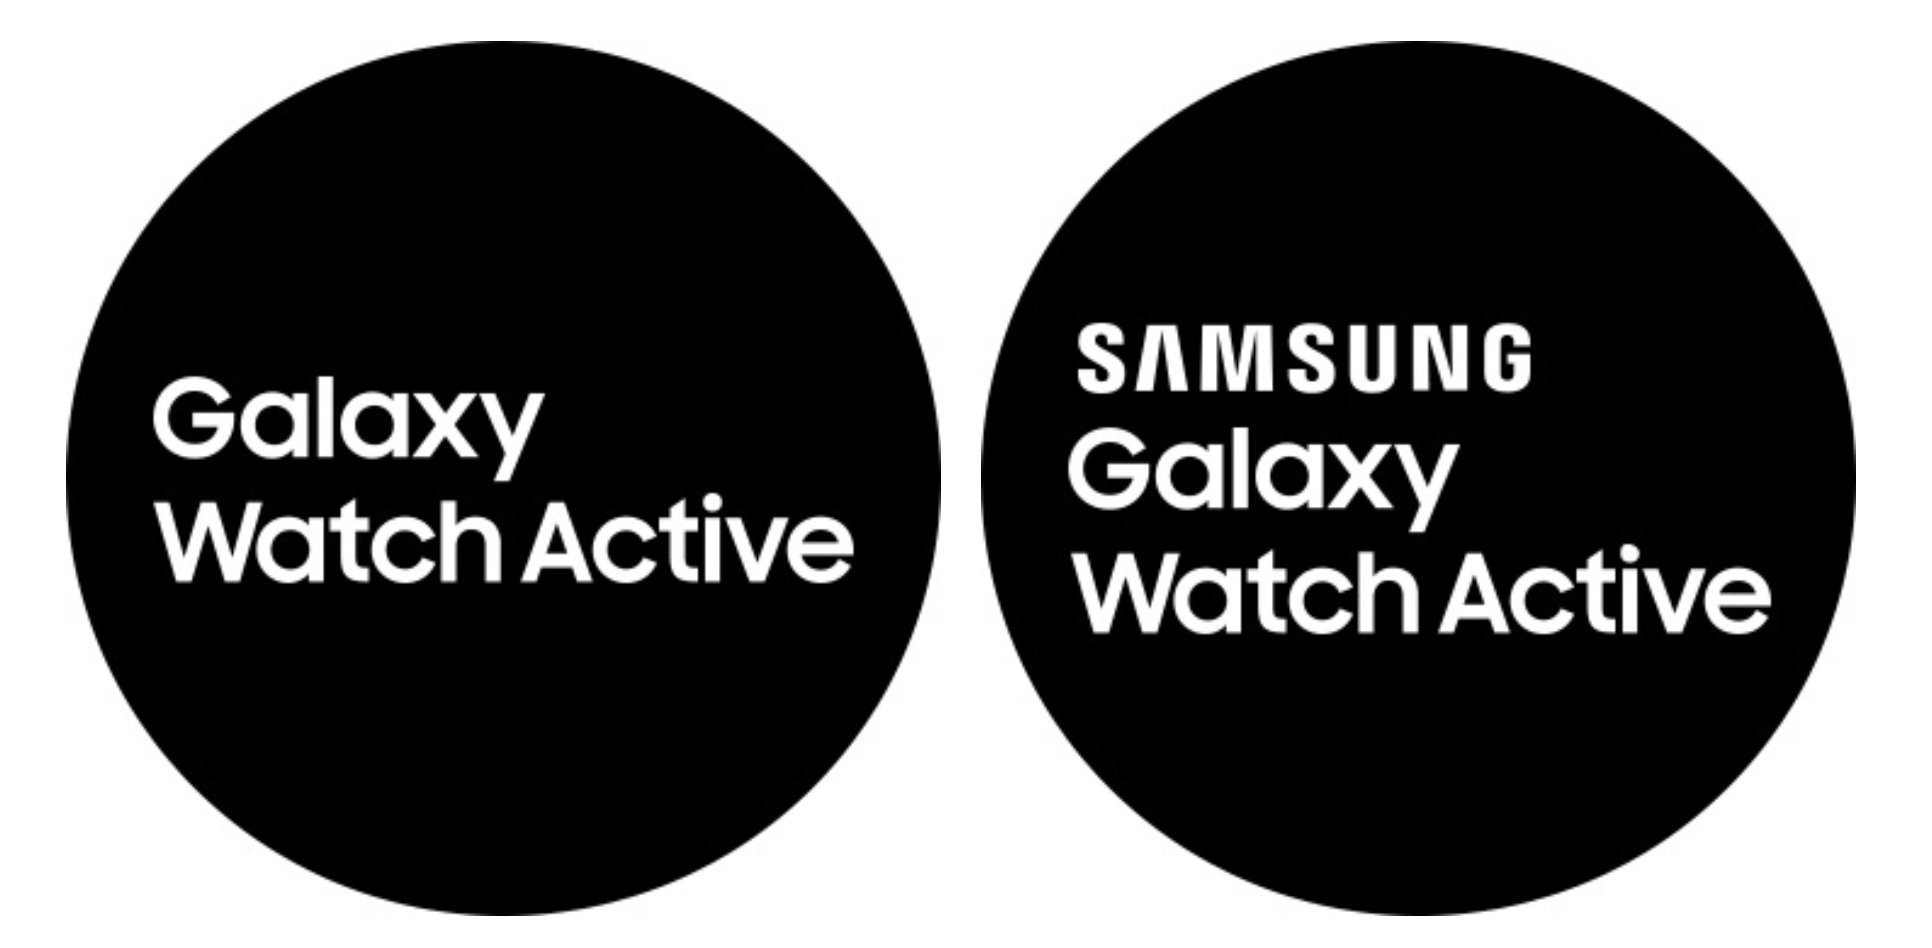 Galaxy Watch Active akan menjadi nama asli smartwatch Samsung berikutnya 2